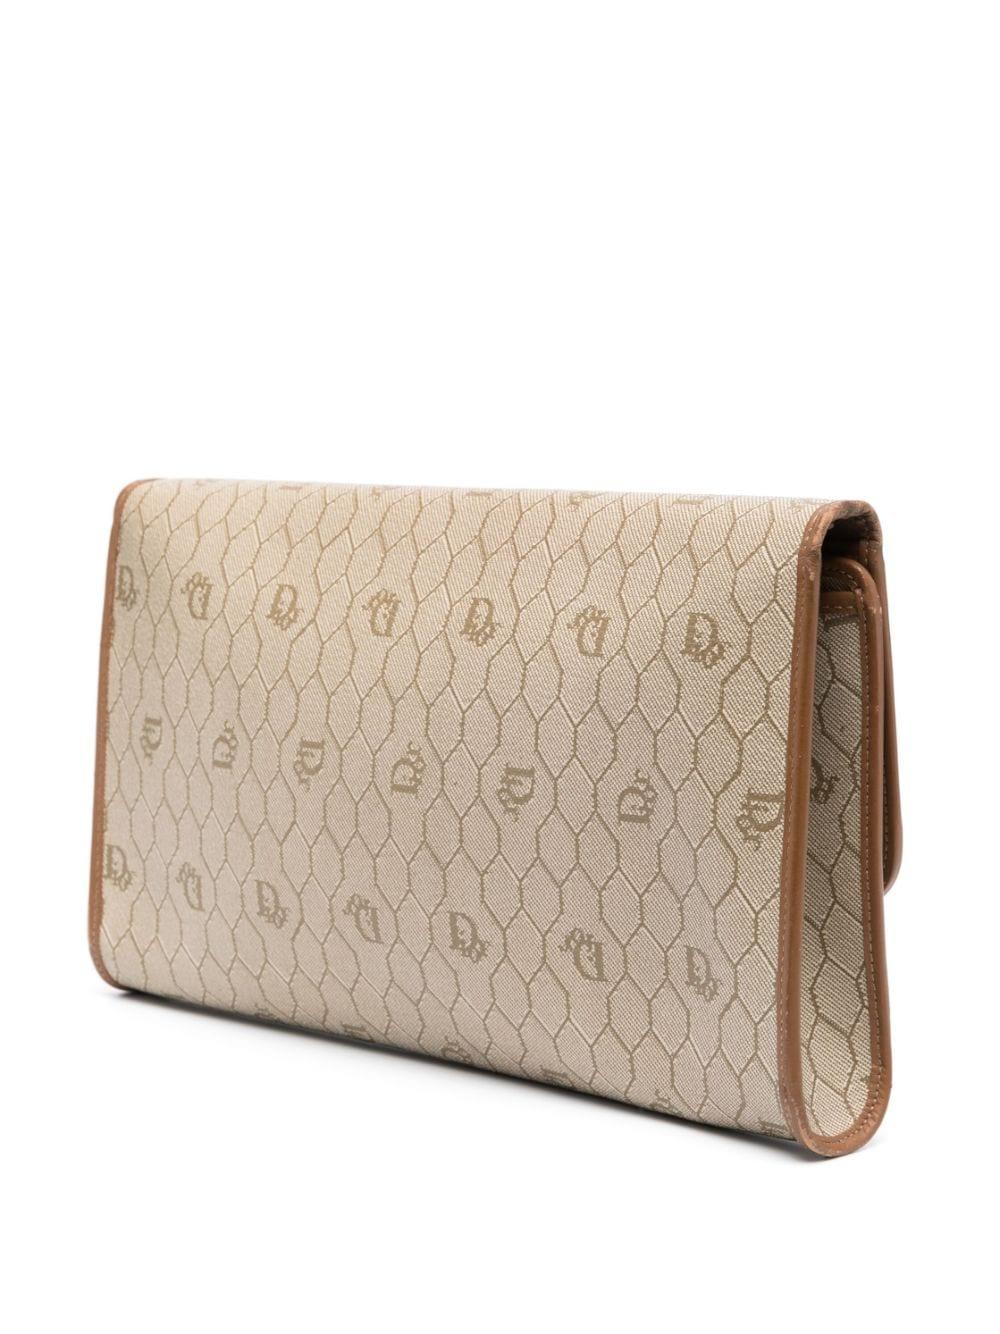 Christian Dior Camel Honeycomb Shoulder Bag In Good Condition For Sale In Paris, FR